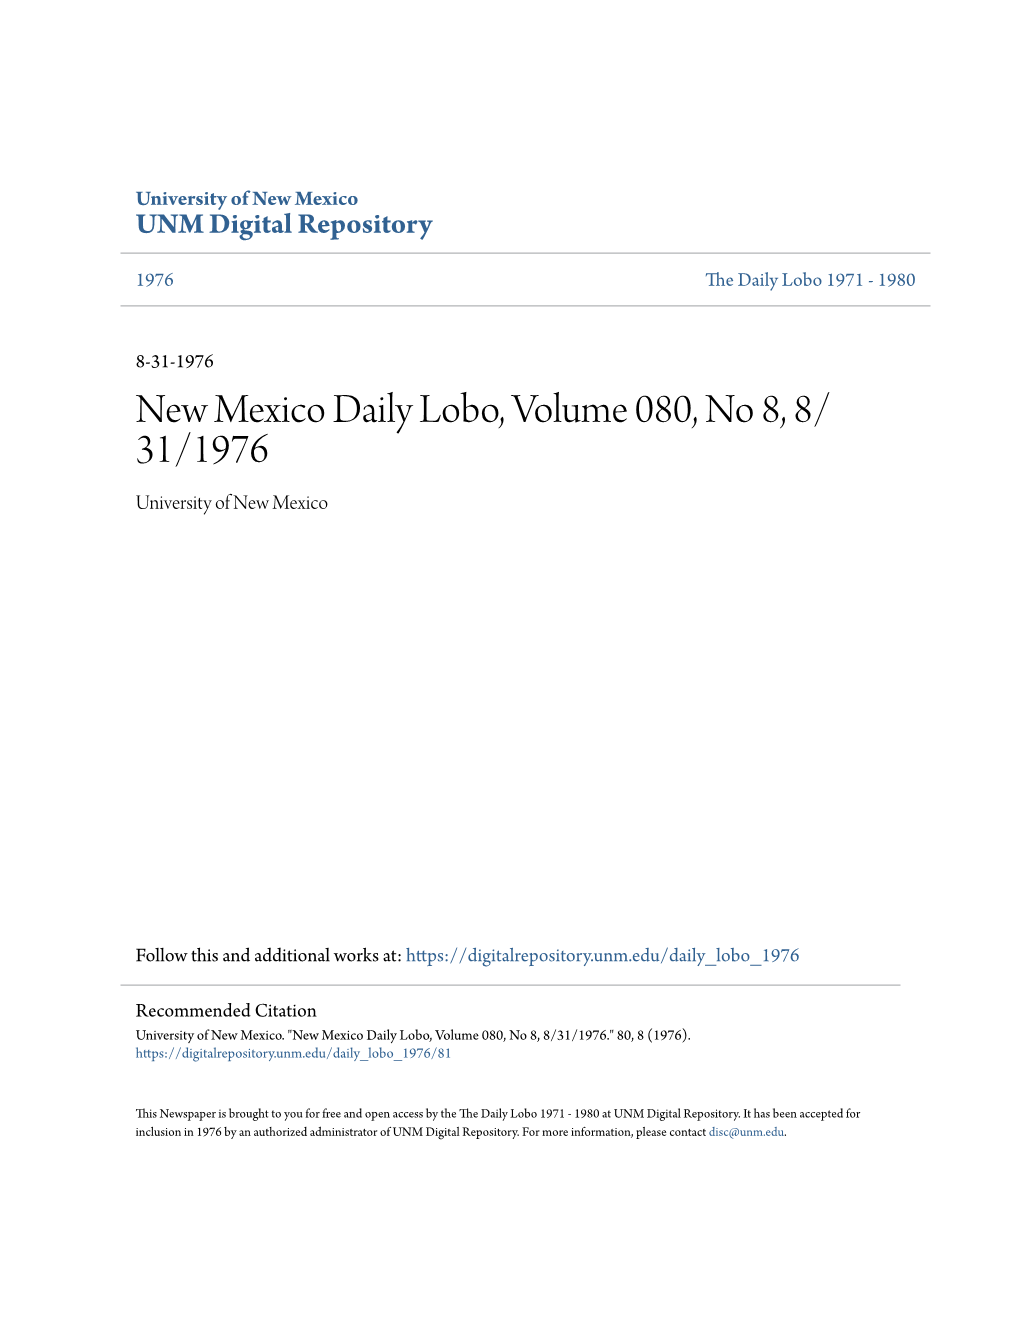 New Mexico Daily Lobo, Volume 080, No 8, 8/31/1976." 80, 8 (1976)